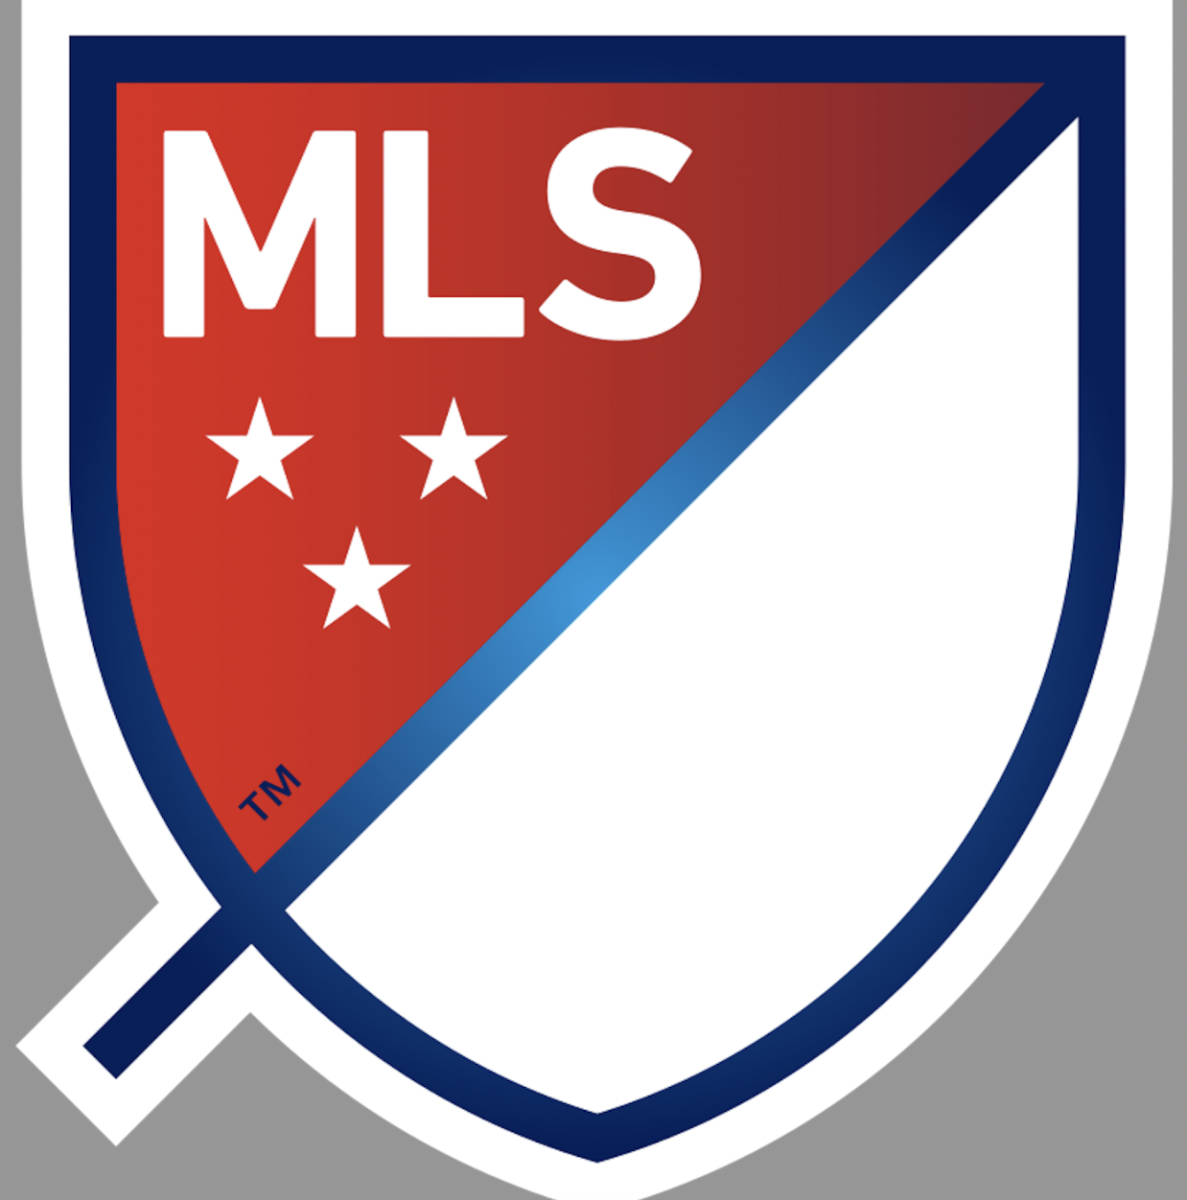 MLS logo 